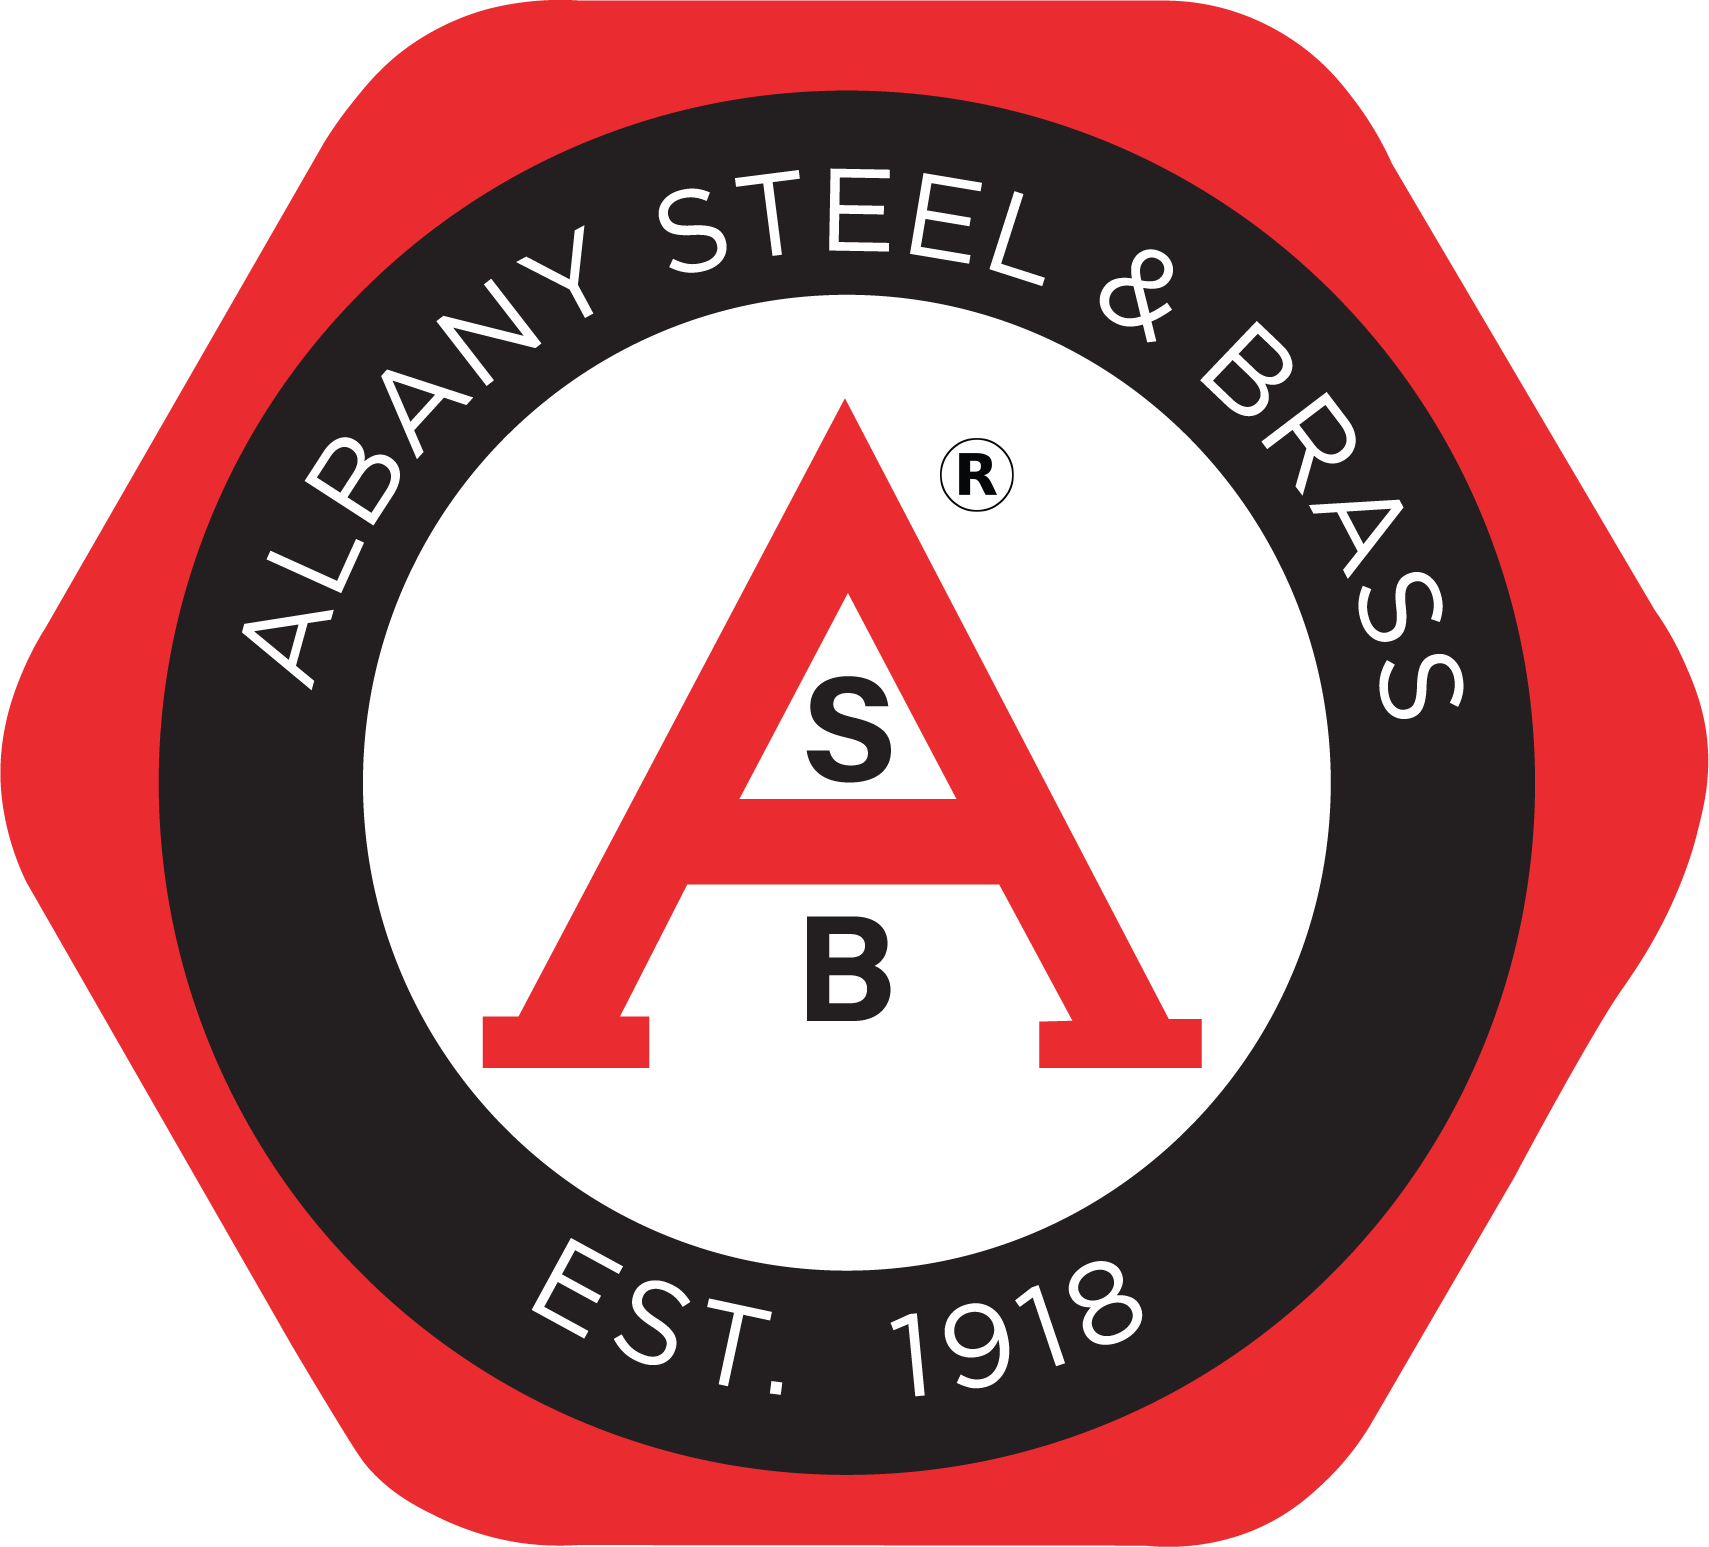 Albany Steel & Brass, Established 1918